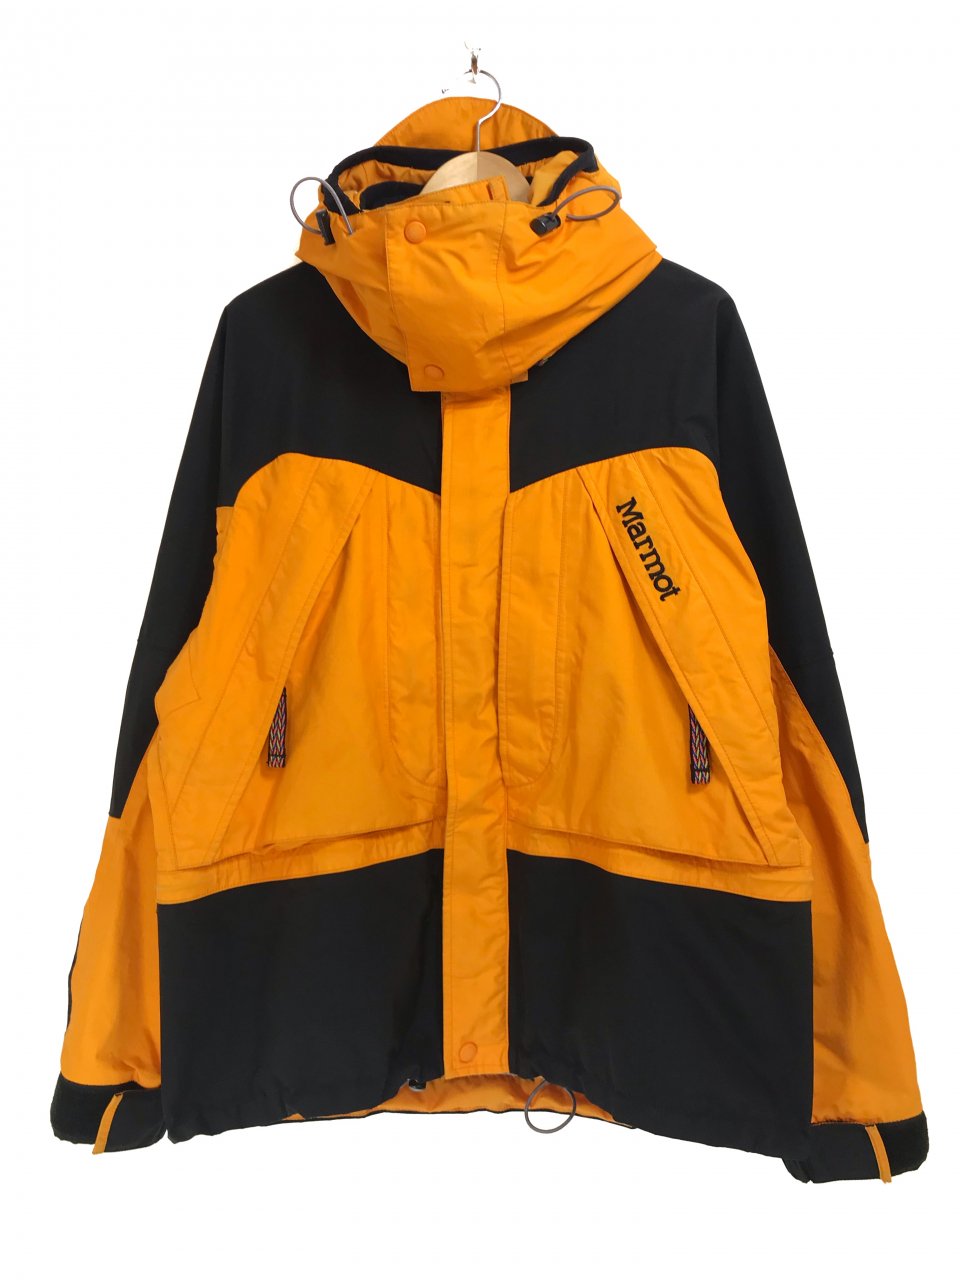 90s Marmot GORE-TEX Mountain Jacket 黄黒 M マーモット ゴアテックス